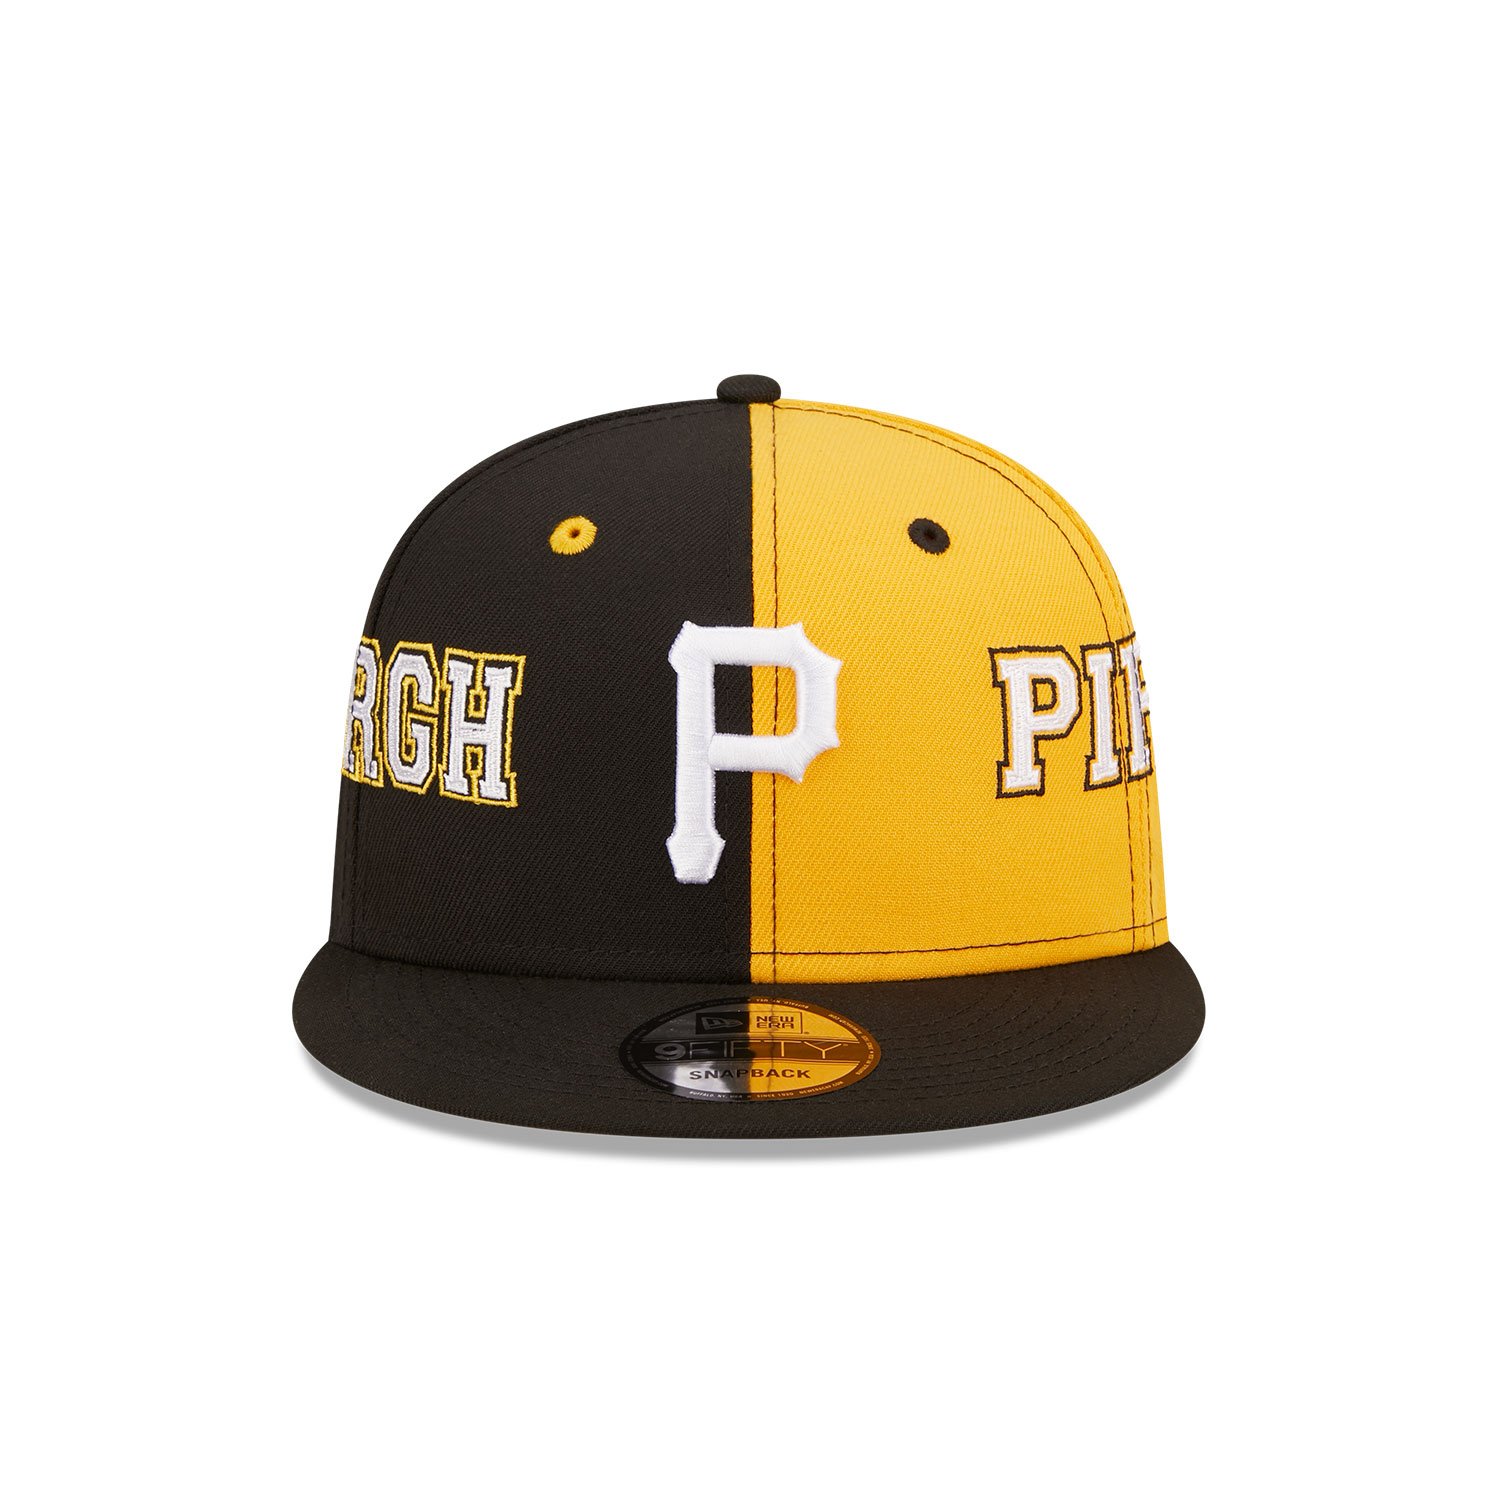 Pittsburgh Pirates Teamsplit Black 9FIFTY Snapback Cap